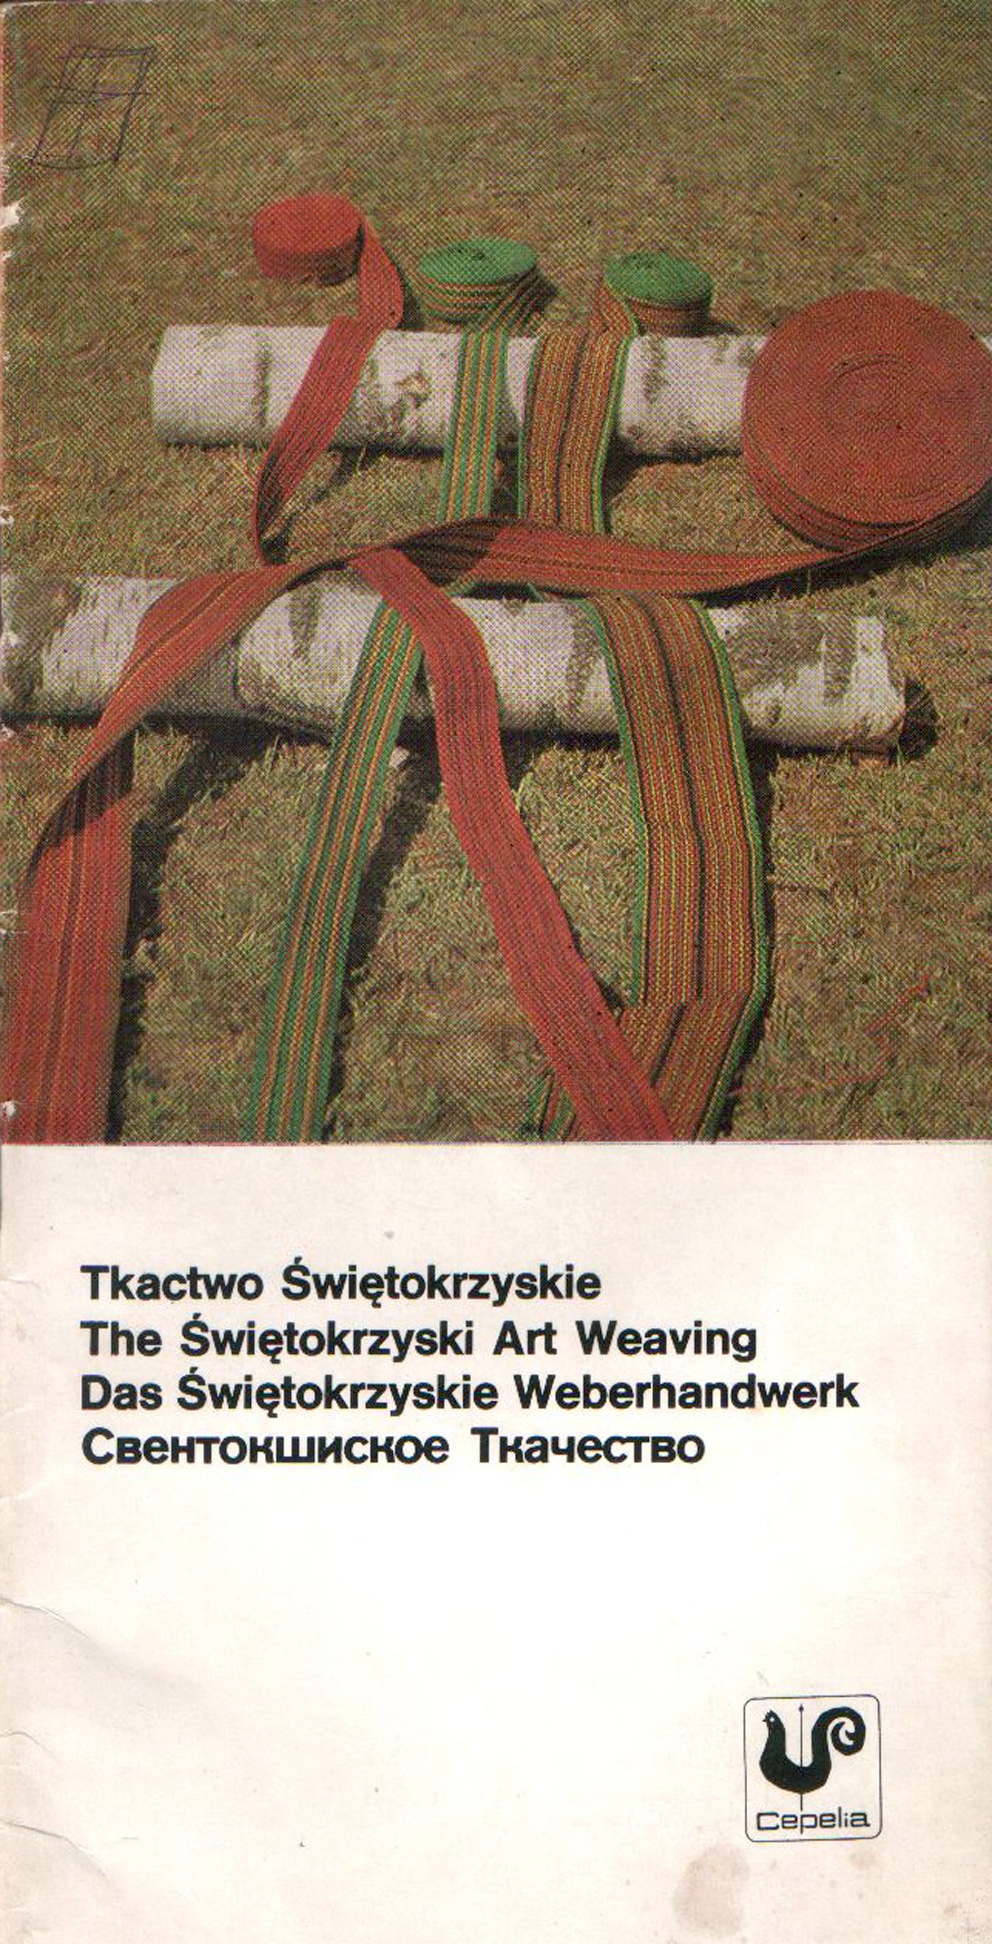 The Świętokrzyski Art Weaving